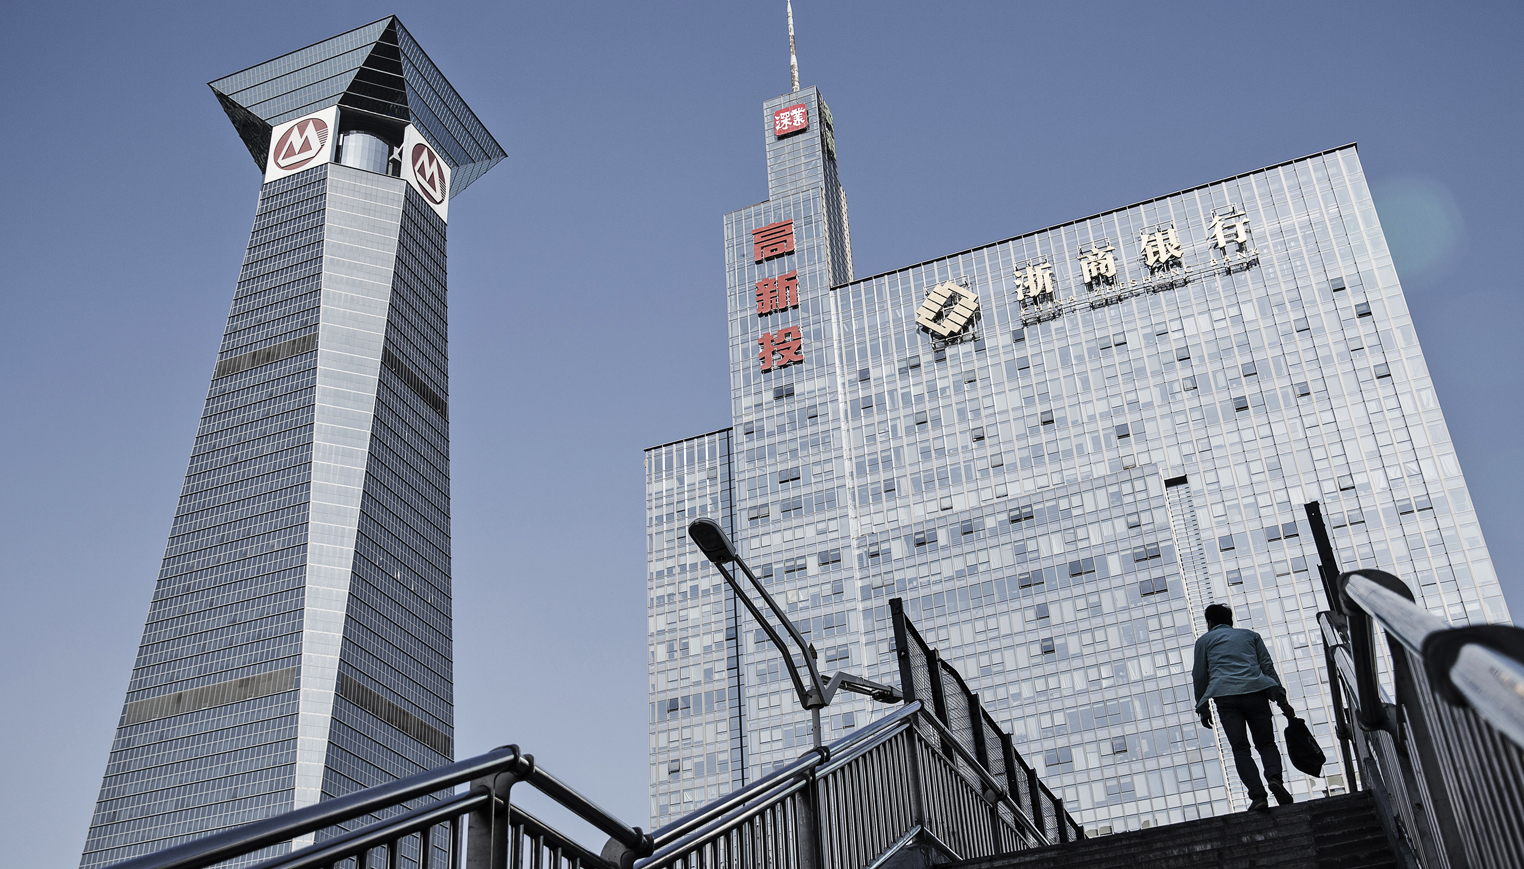 China Zheshang Bank embedded